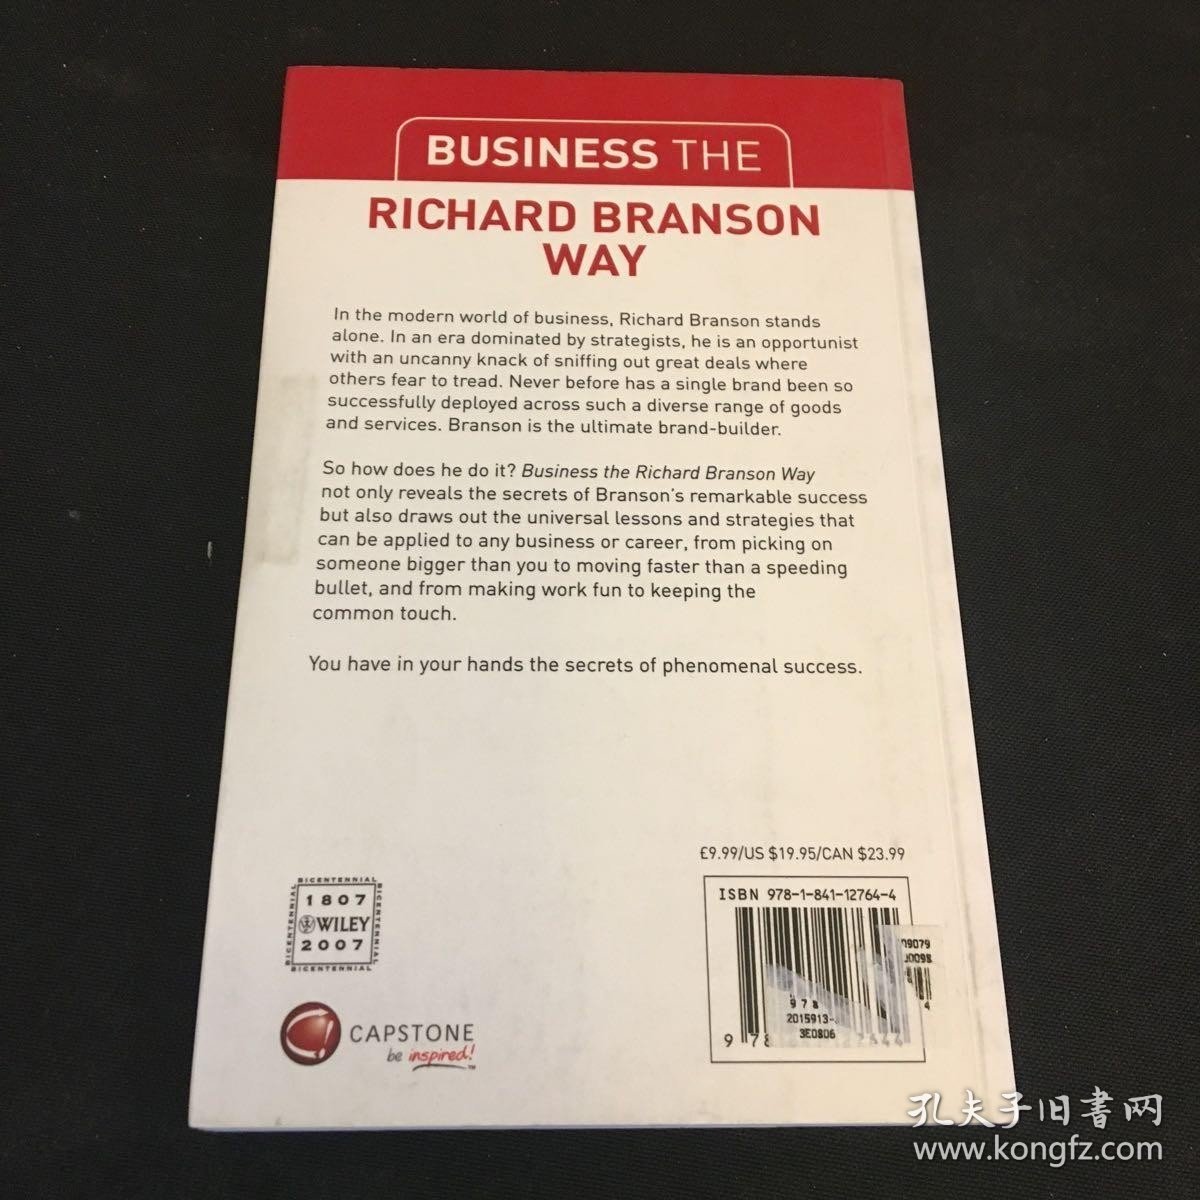 BUSINESS THE RICHARD BRANSON WAY